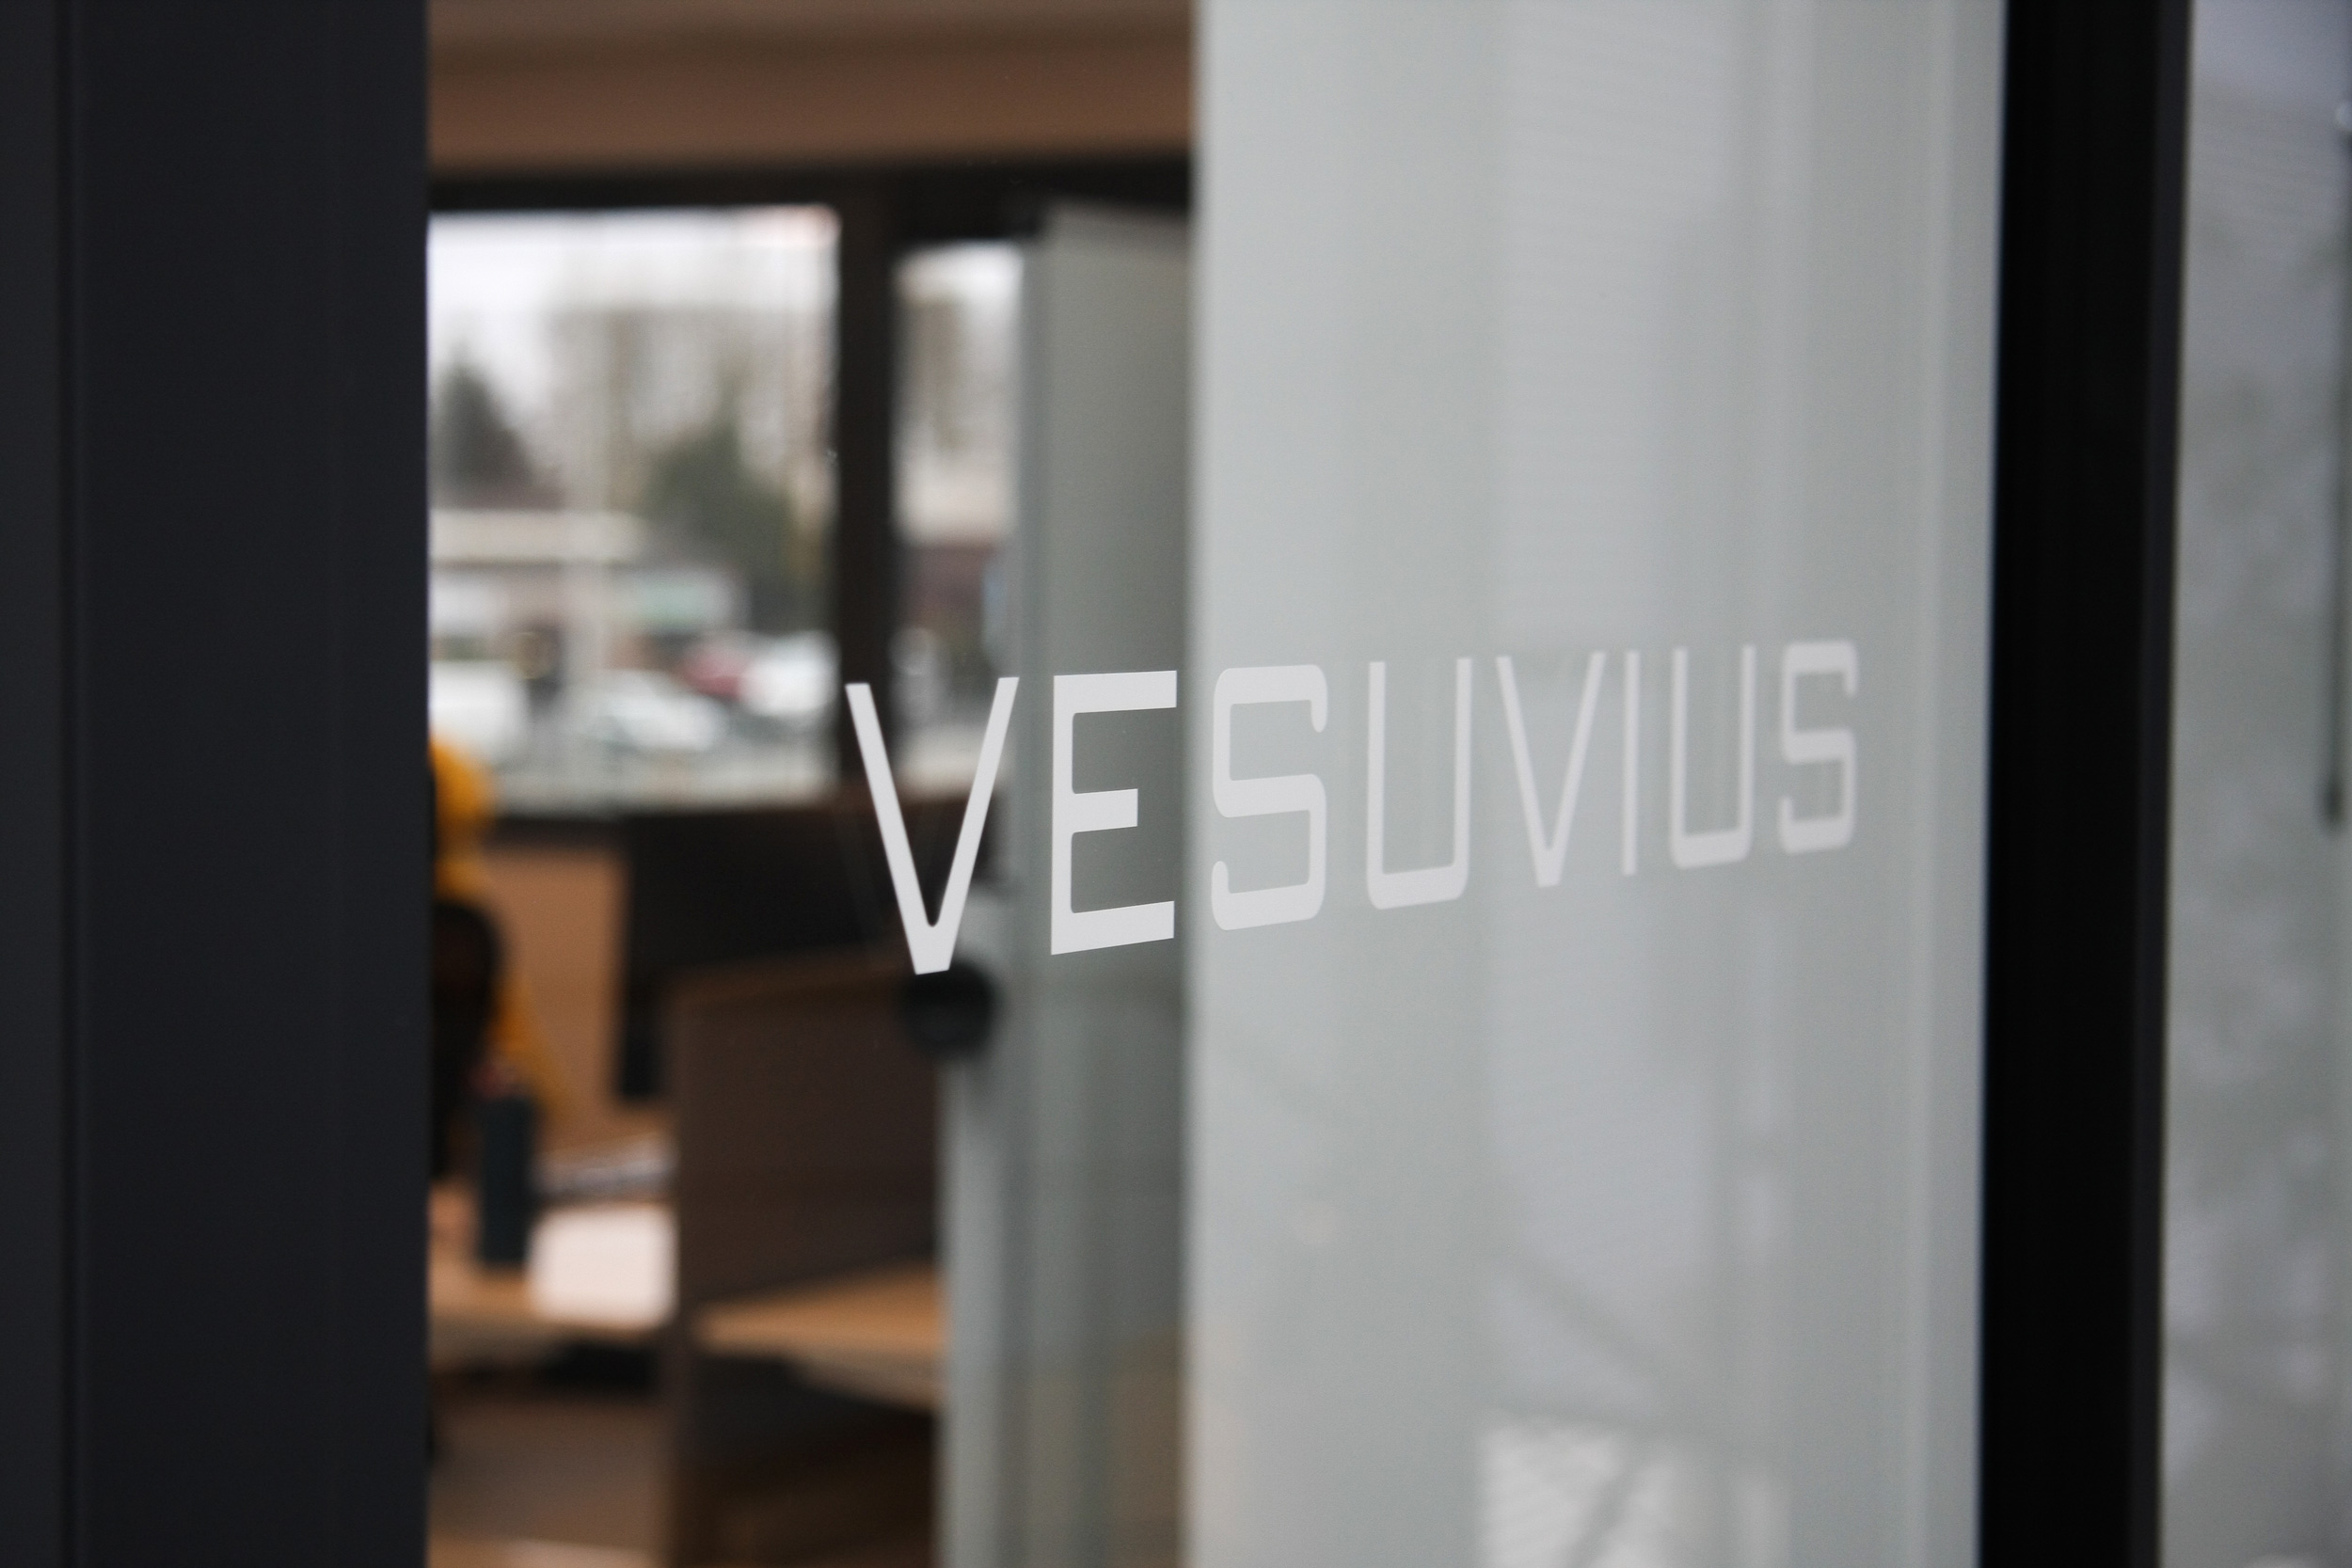 Logo vesuvius en sticker blanc sur vitre